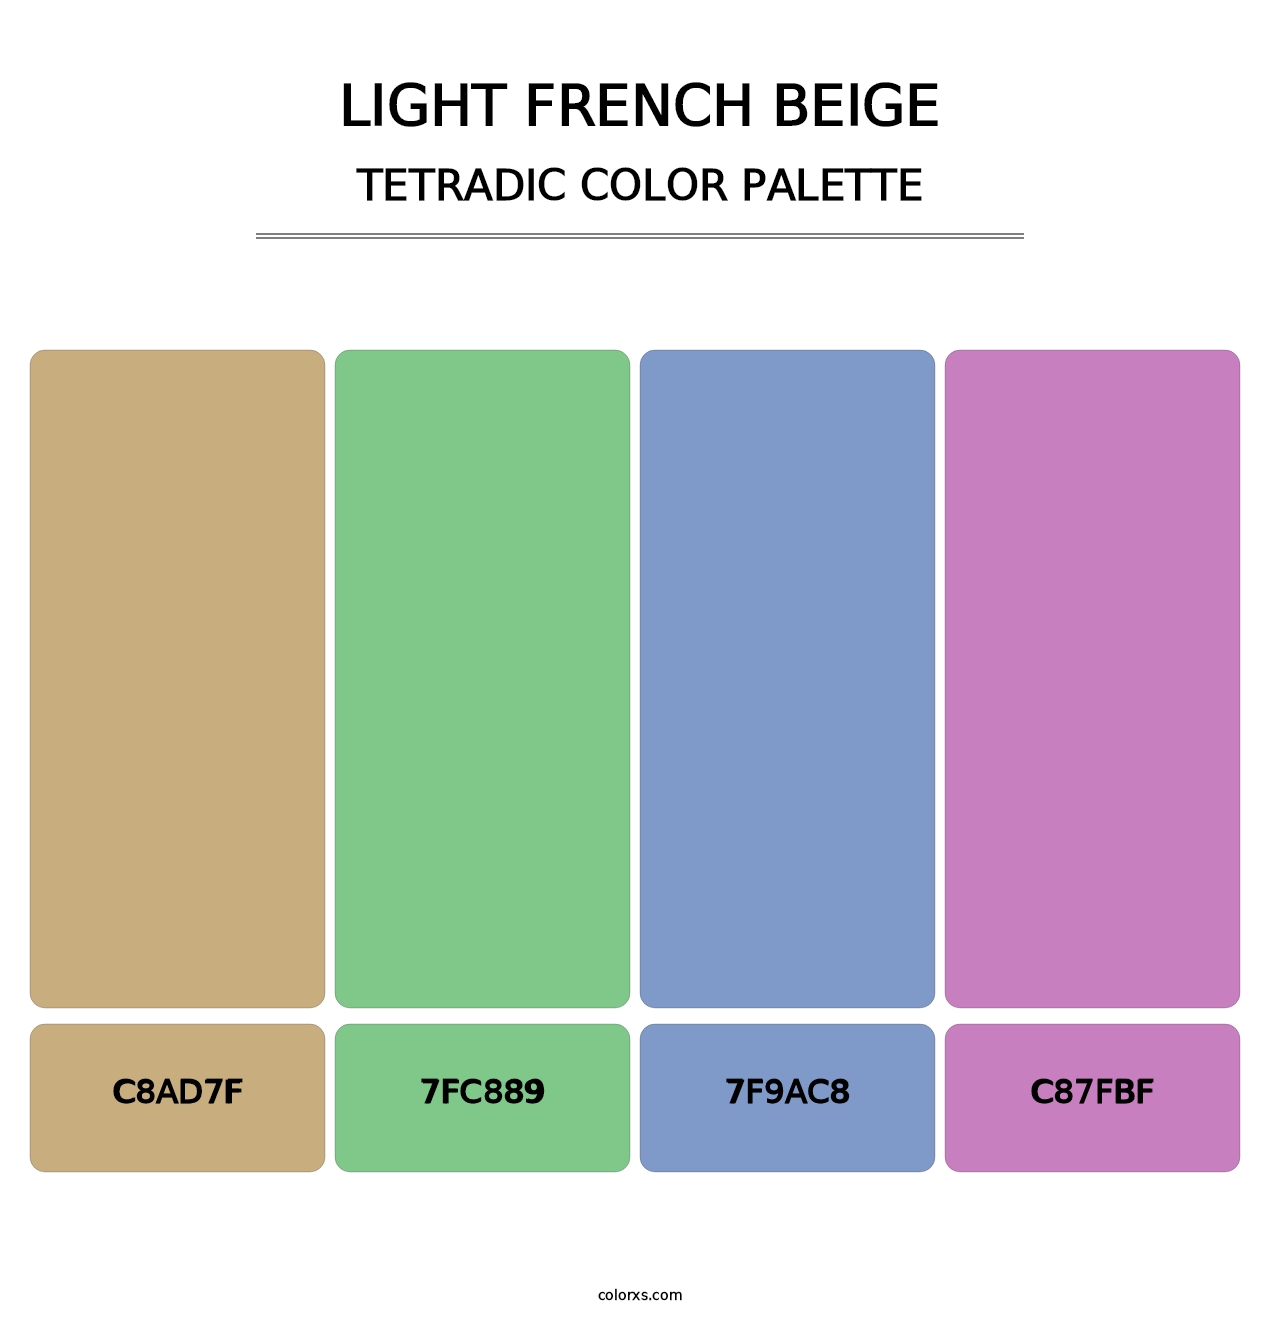 Light French Beige - Tetradic Color Palette